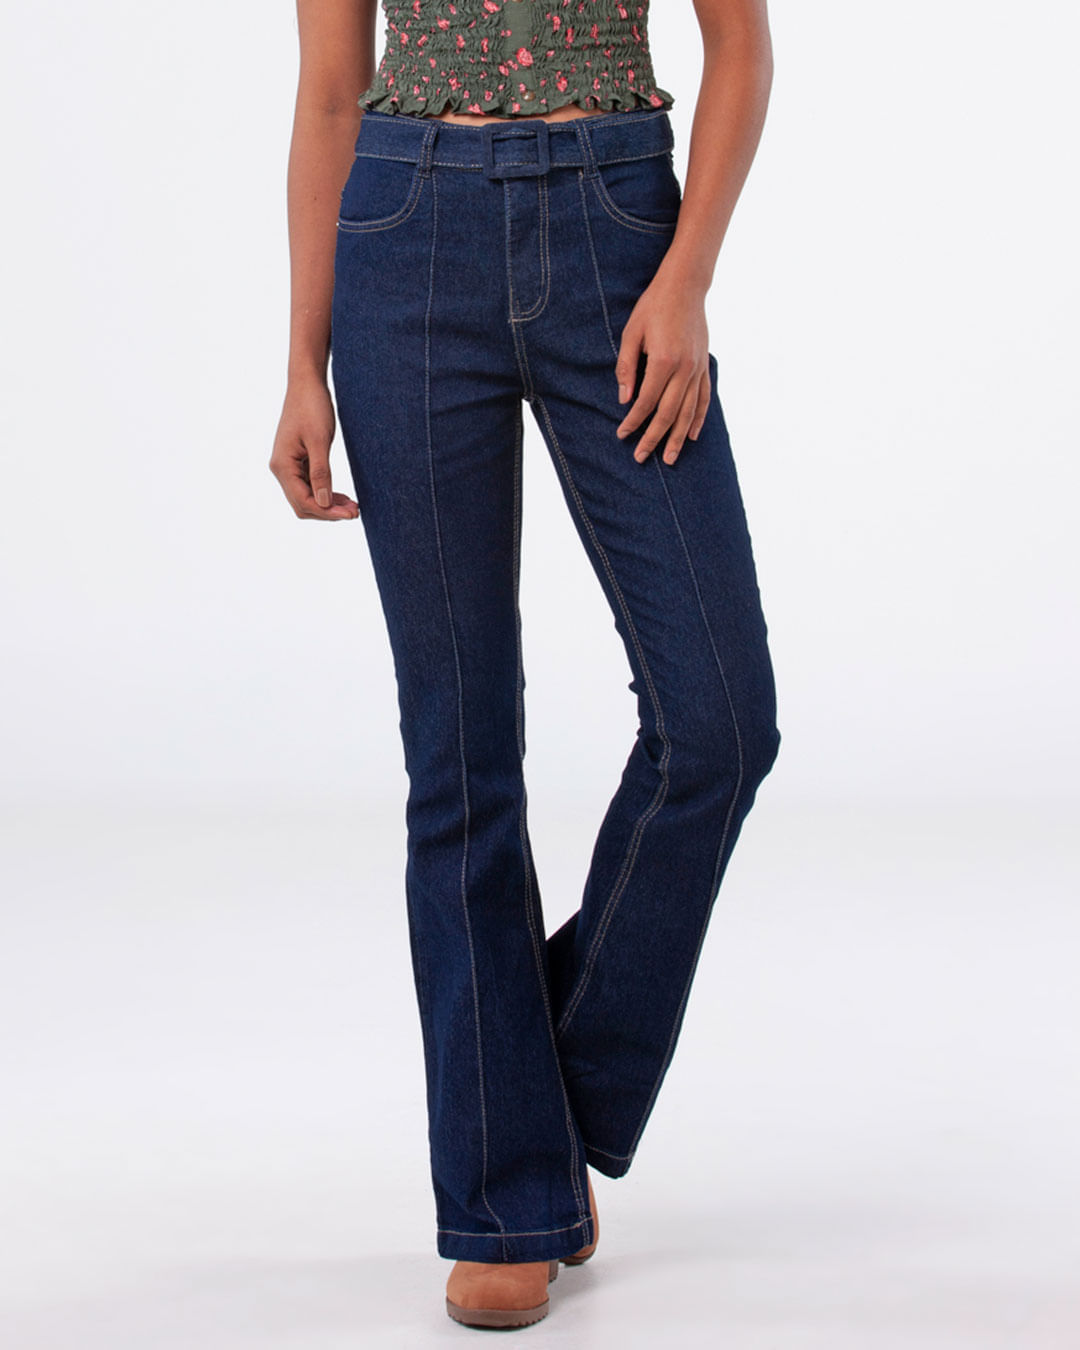 Calca-Jeans-Feminina-Flare-Pespontos-Azul-Escuro